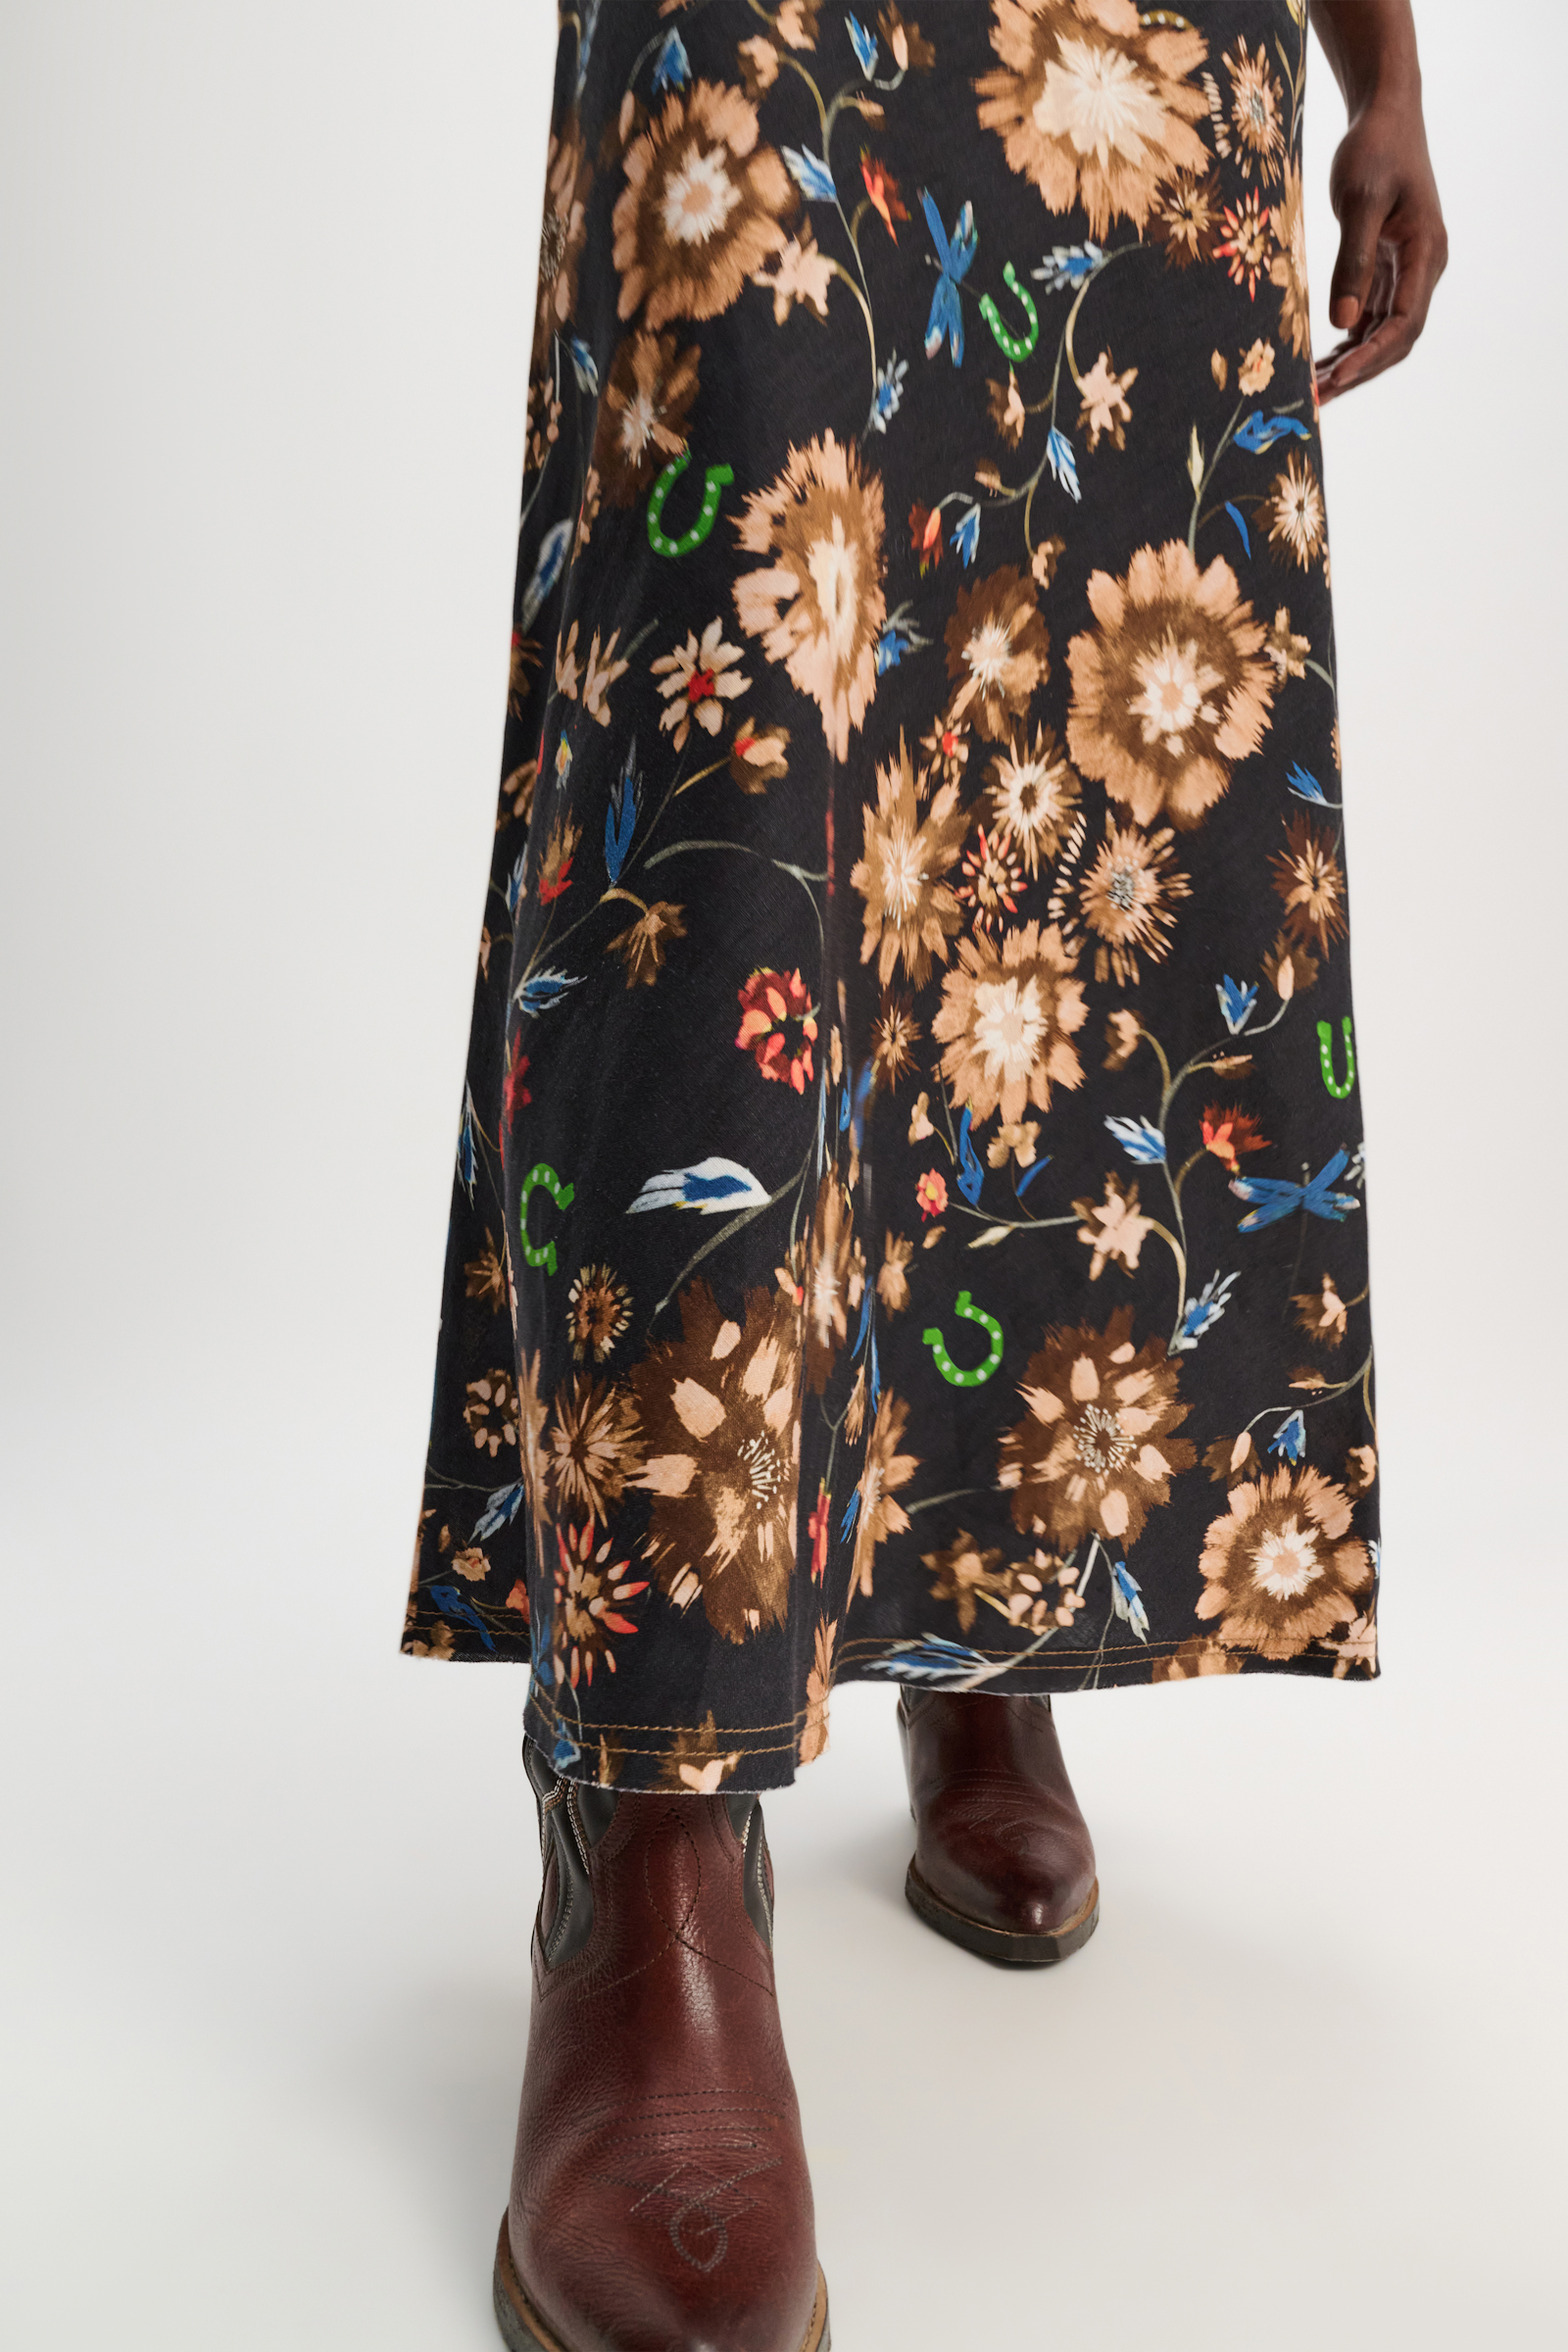 Dorothee Schumacher Printed linen skirt with removable leather tie belt dark mix